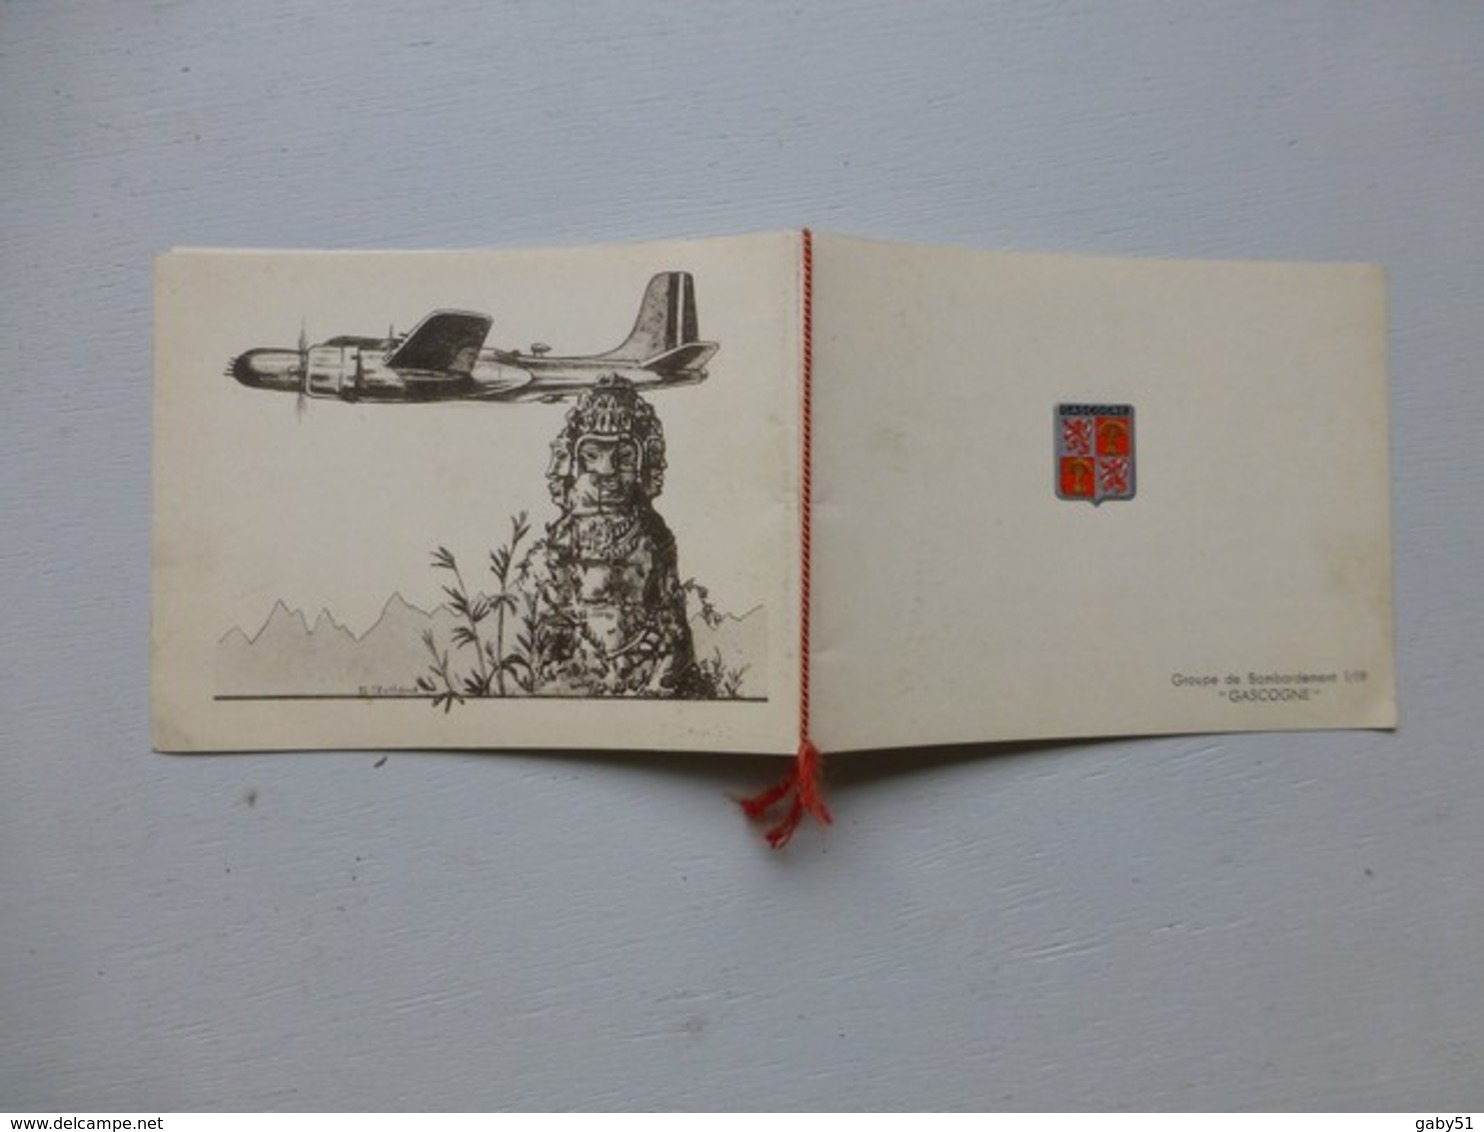 AVIATION Groupe De Bombardement 1/19 GASCOGNE, Vers 1940 ? ; PAP05 - Historische Dokumente